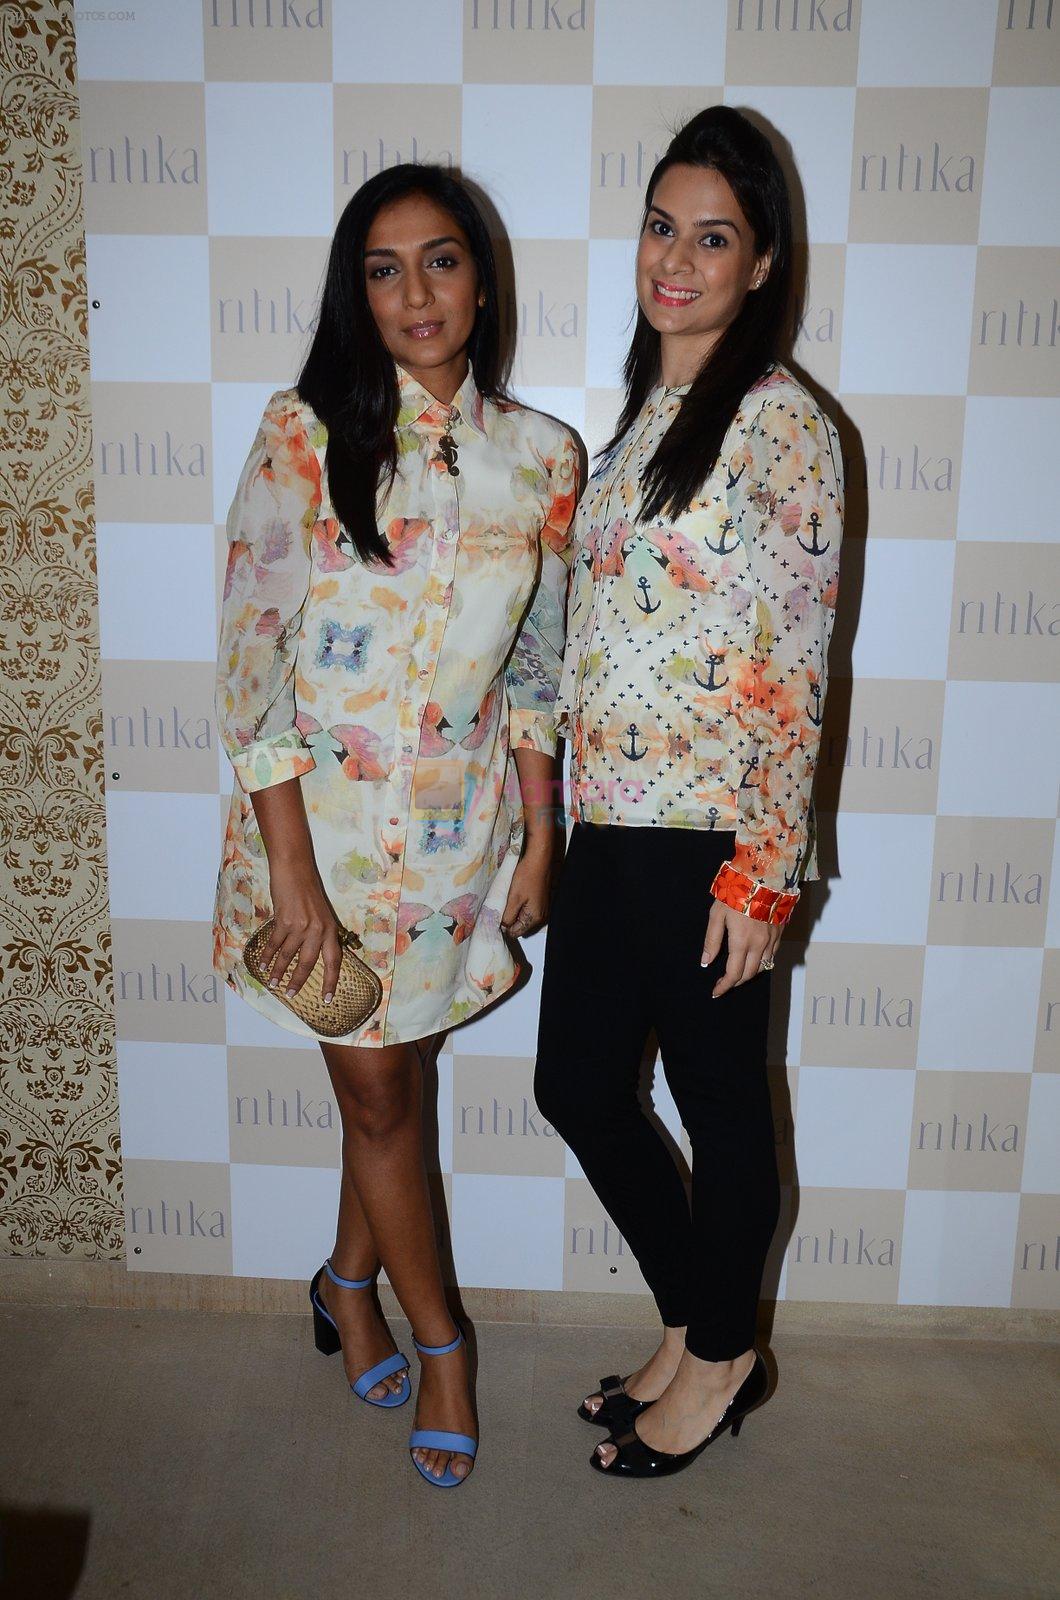 Shweta Salve at Ritika Bharwani Fashion Preview in Mumbai on 10th April 2015